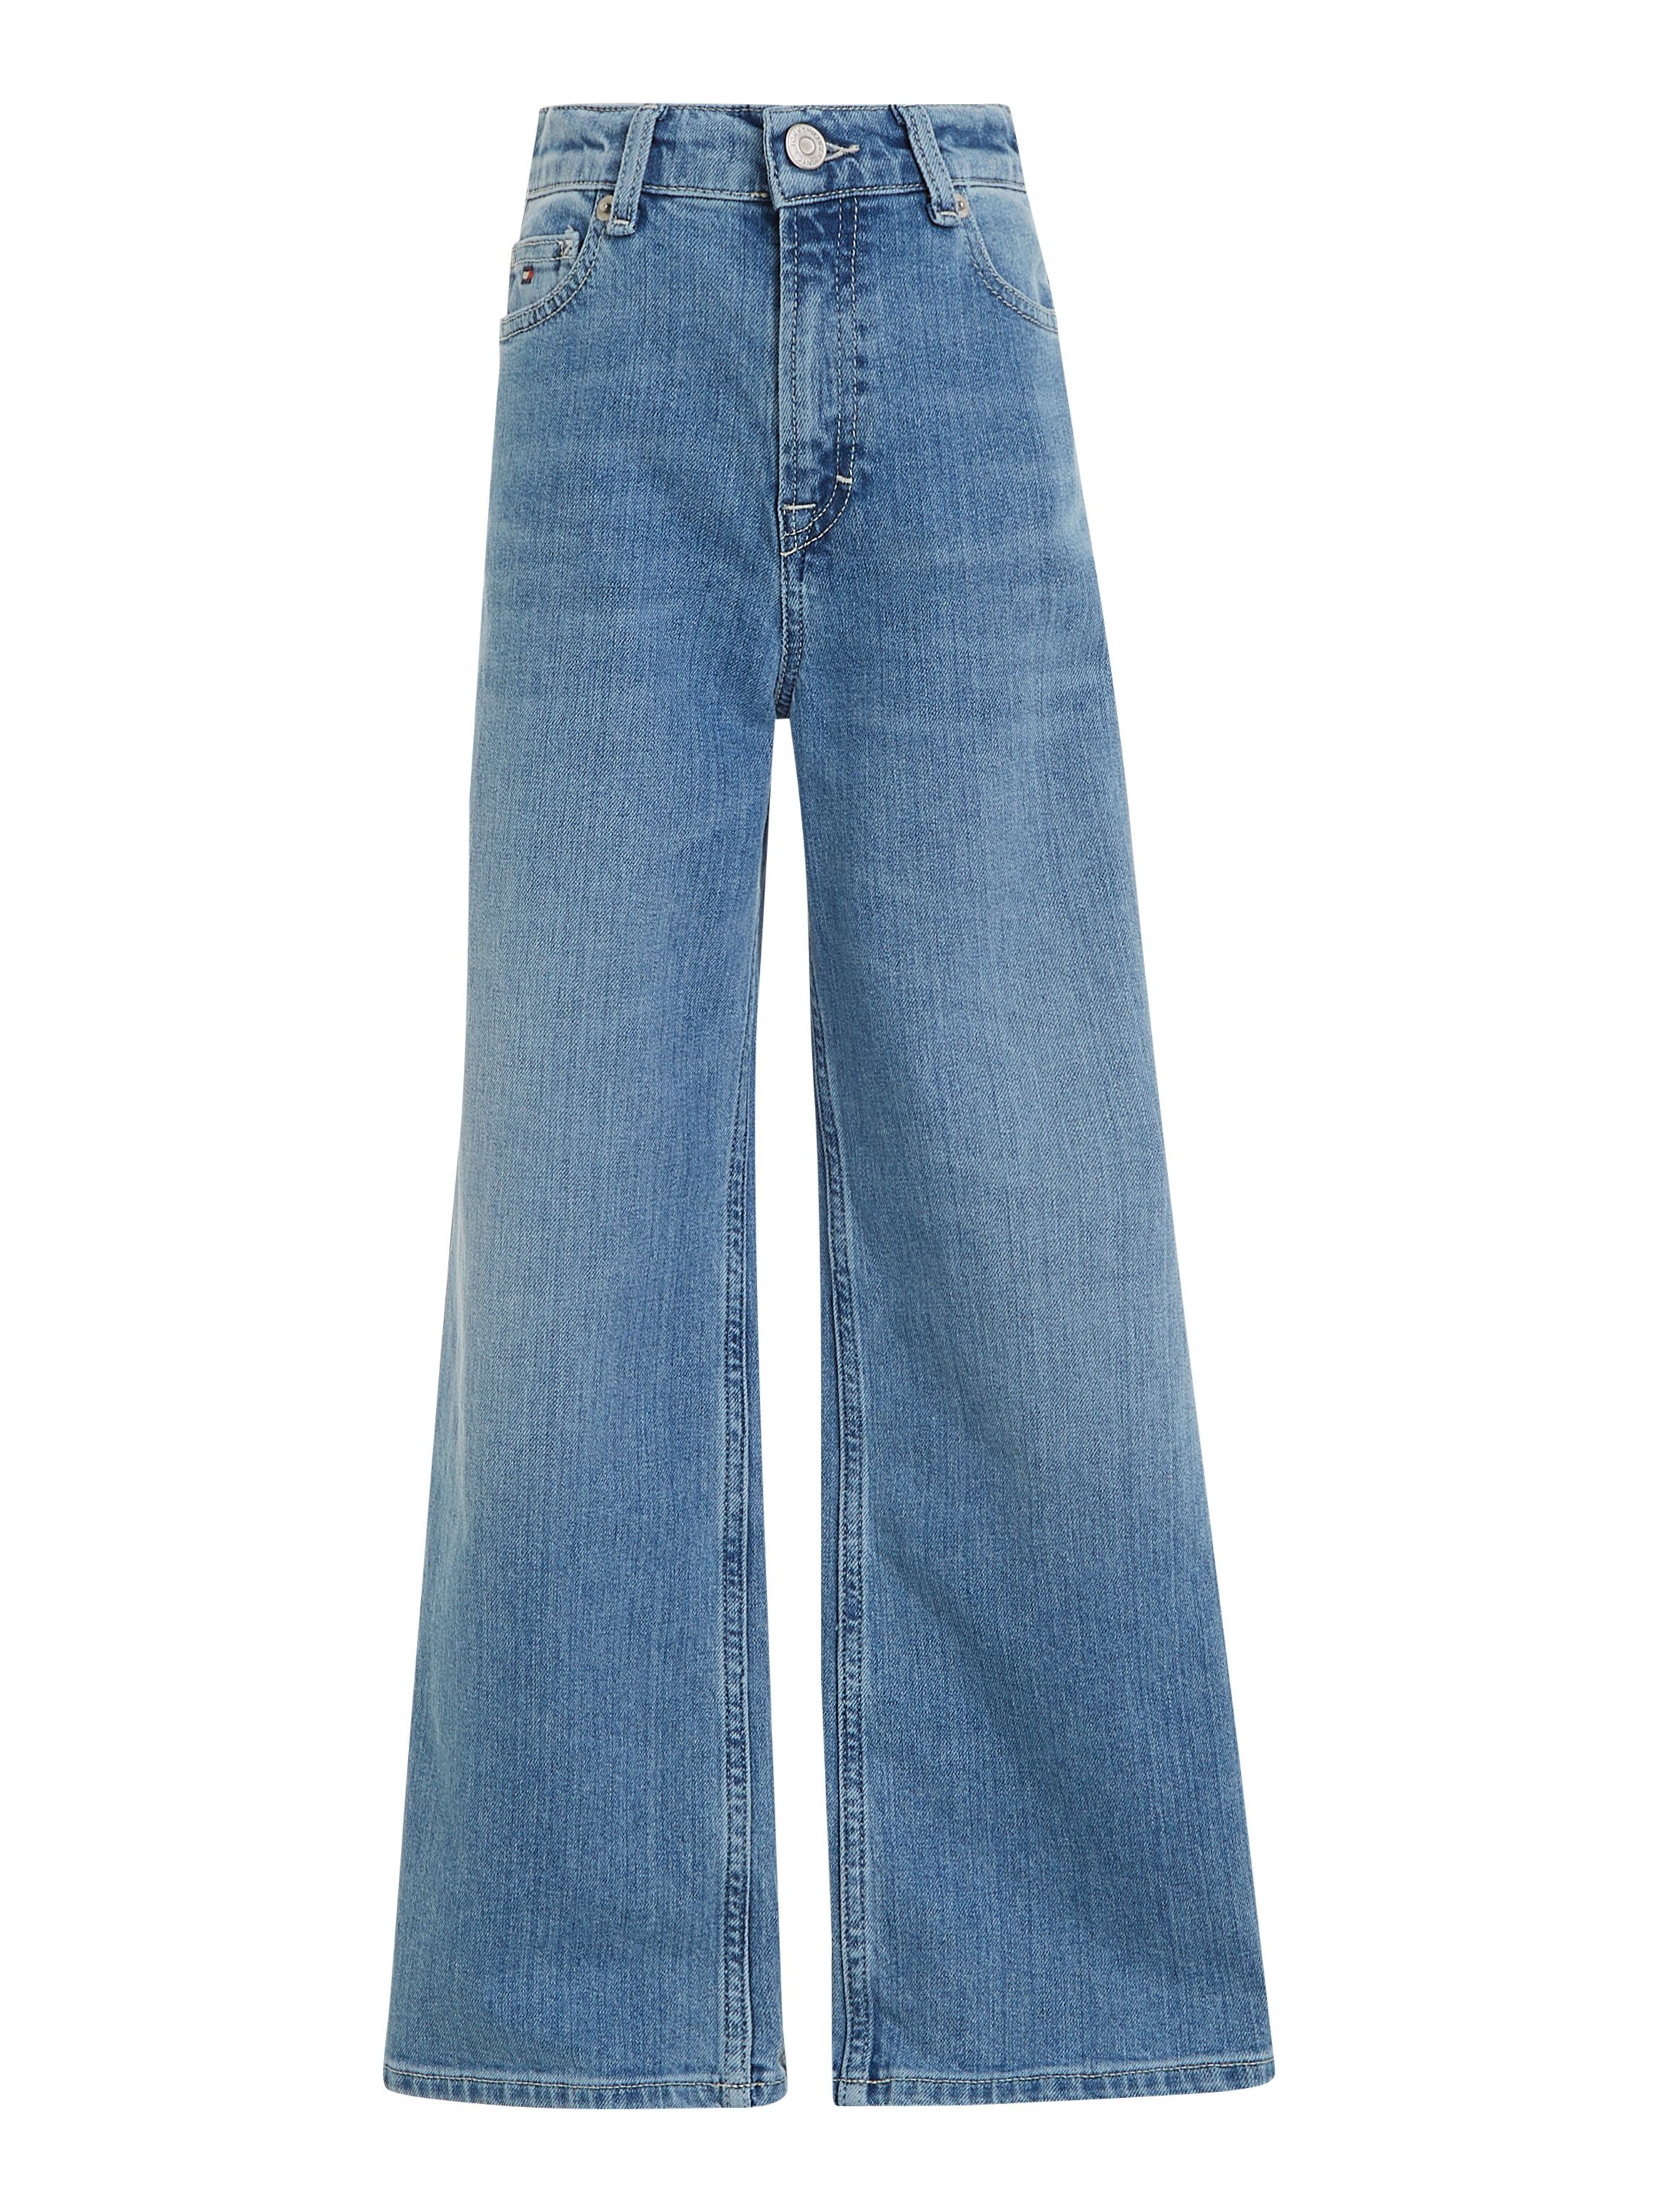 Jeans MABEL MID Weite Tommy WASH im 5-Pocket-Style Hilfiger